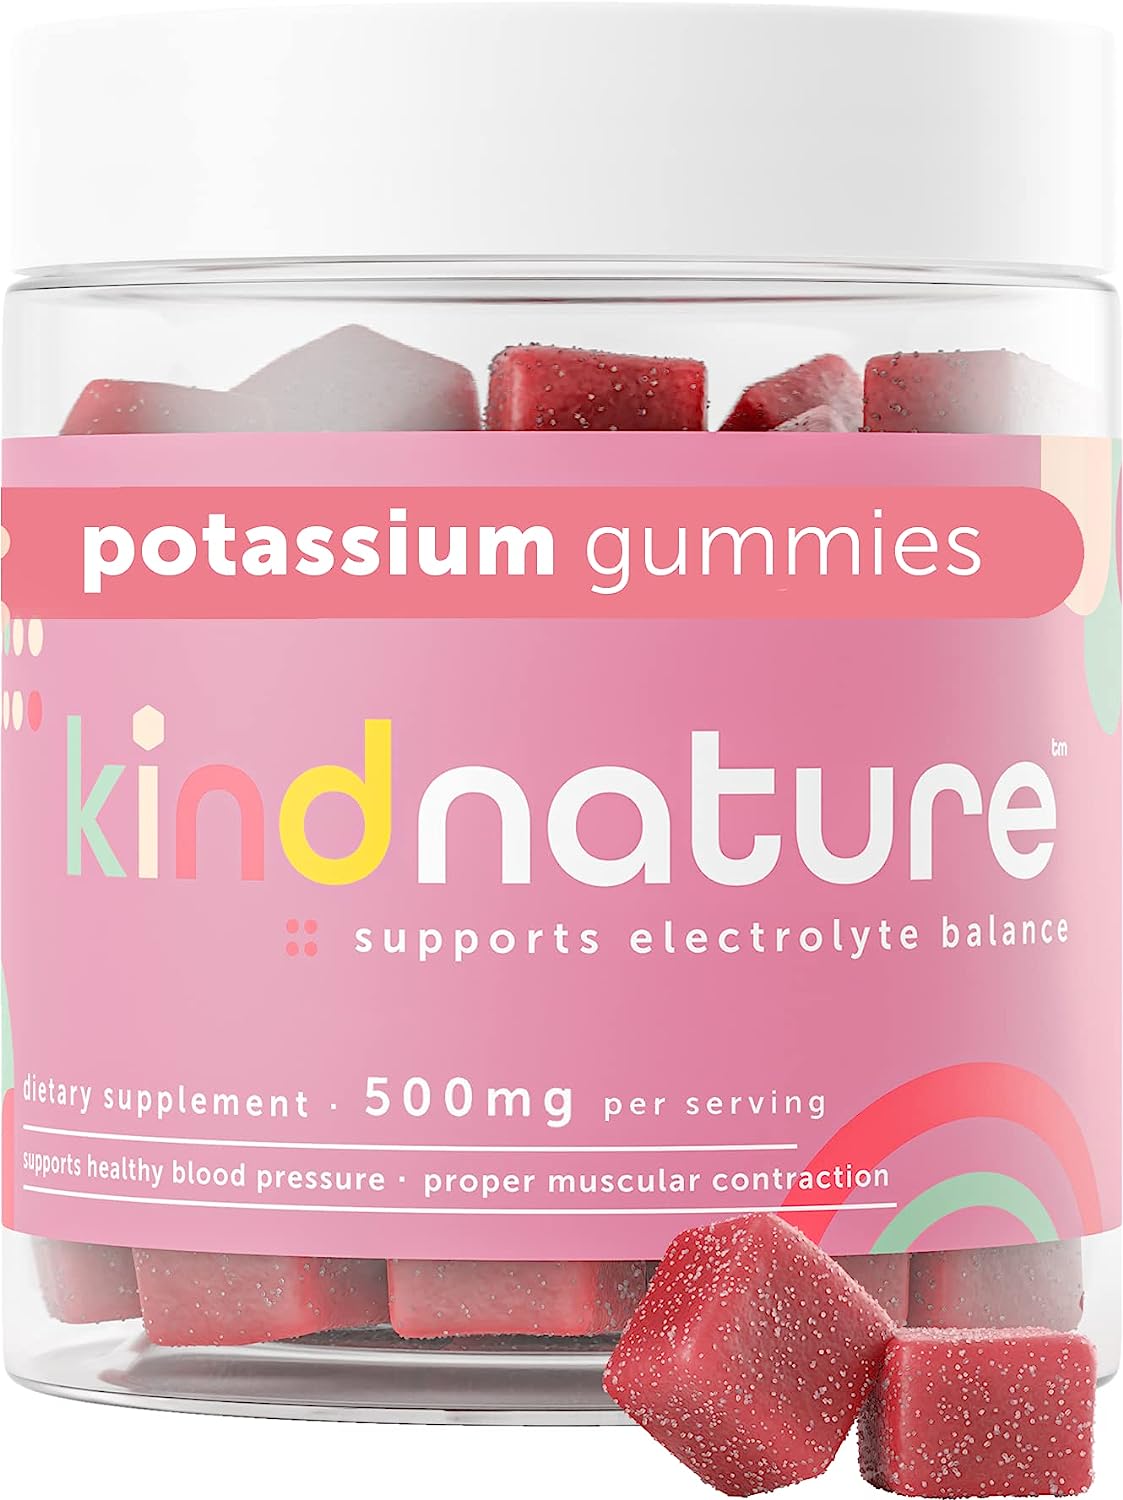 Kind Nature High Potassium Supplement 500mg - Chewable [...]